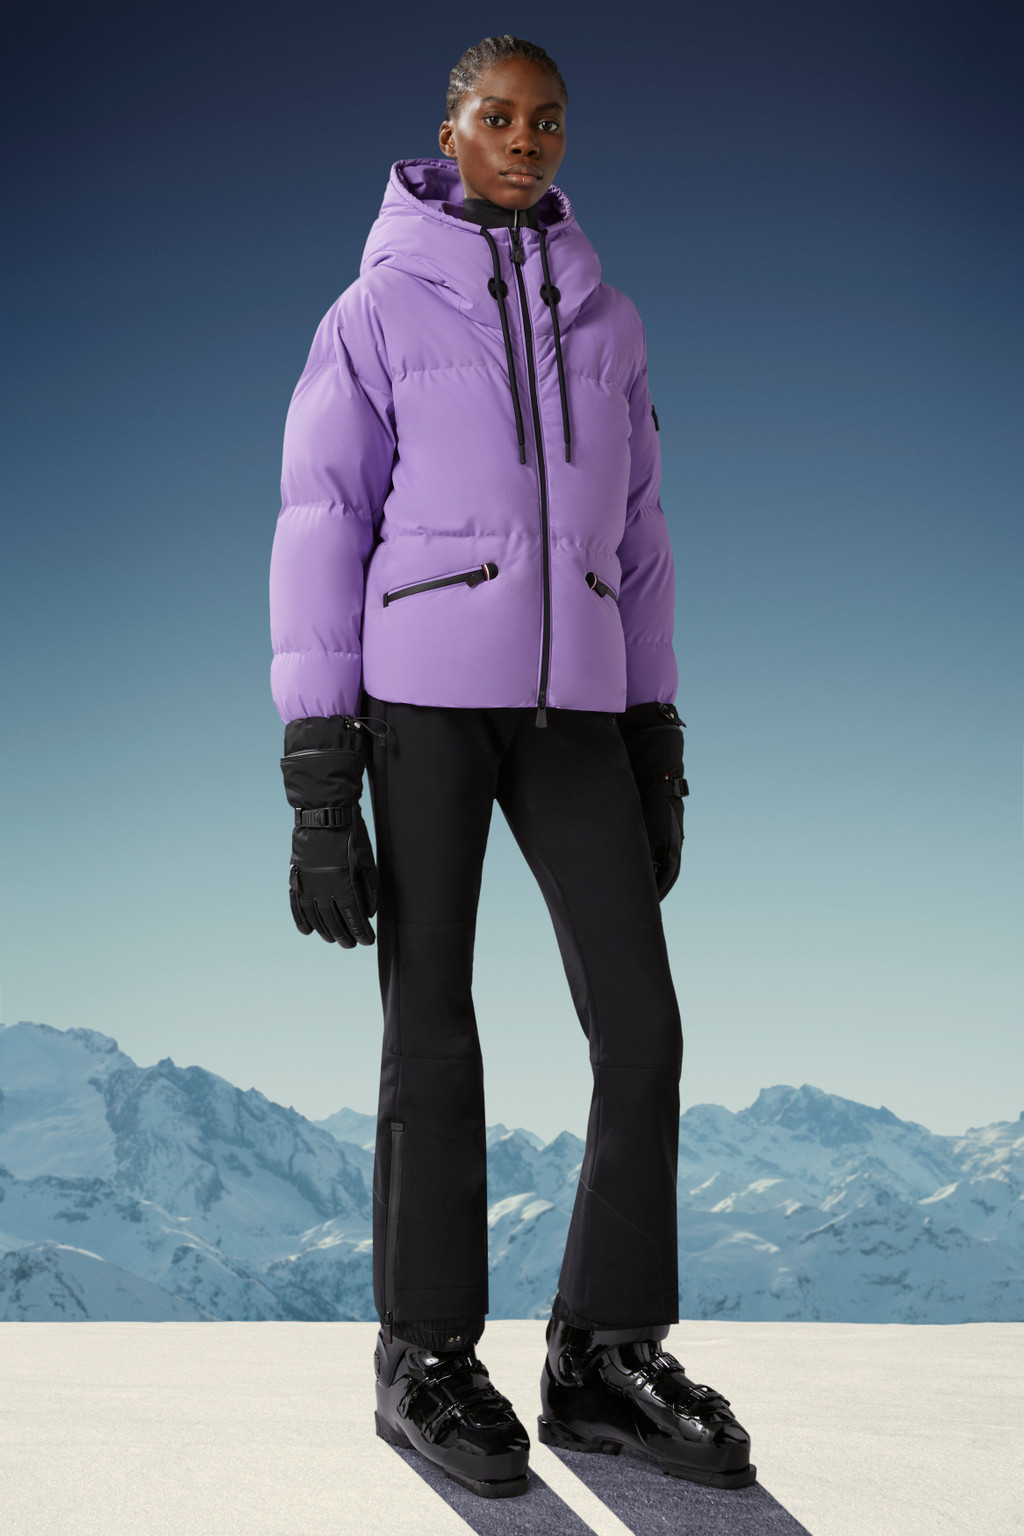 Snow Country Women's Insulated Ski Pants, Teal, XL Short - Walmart.com